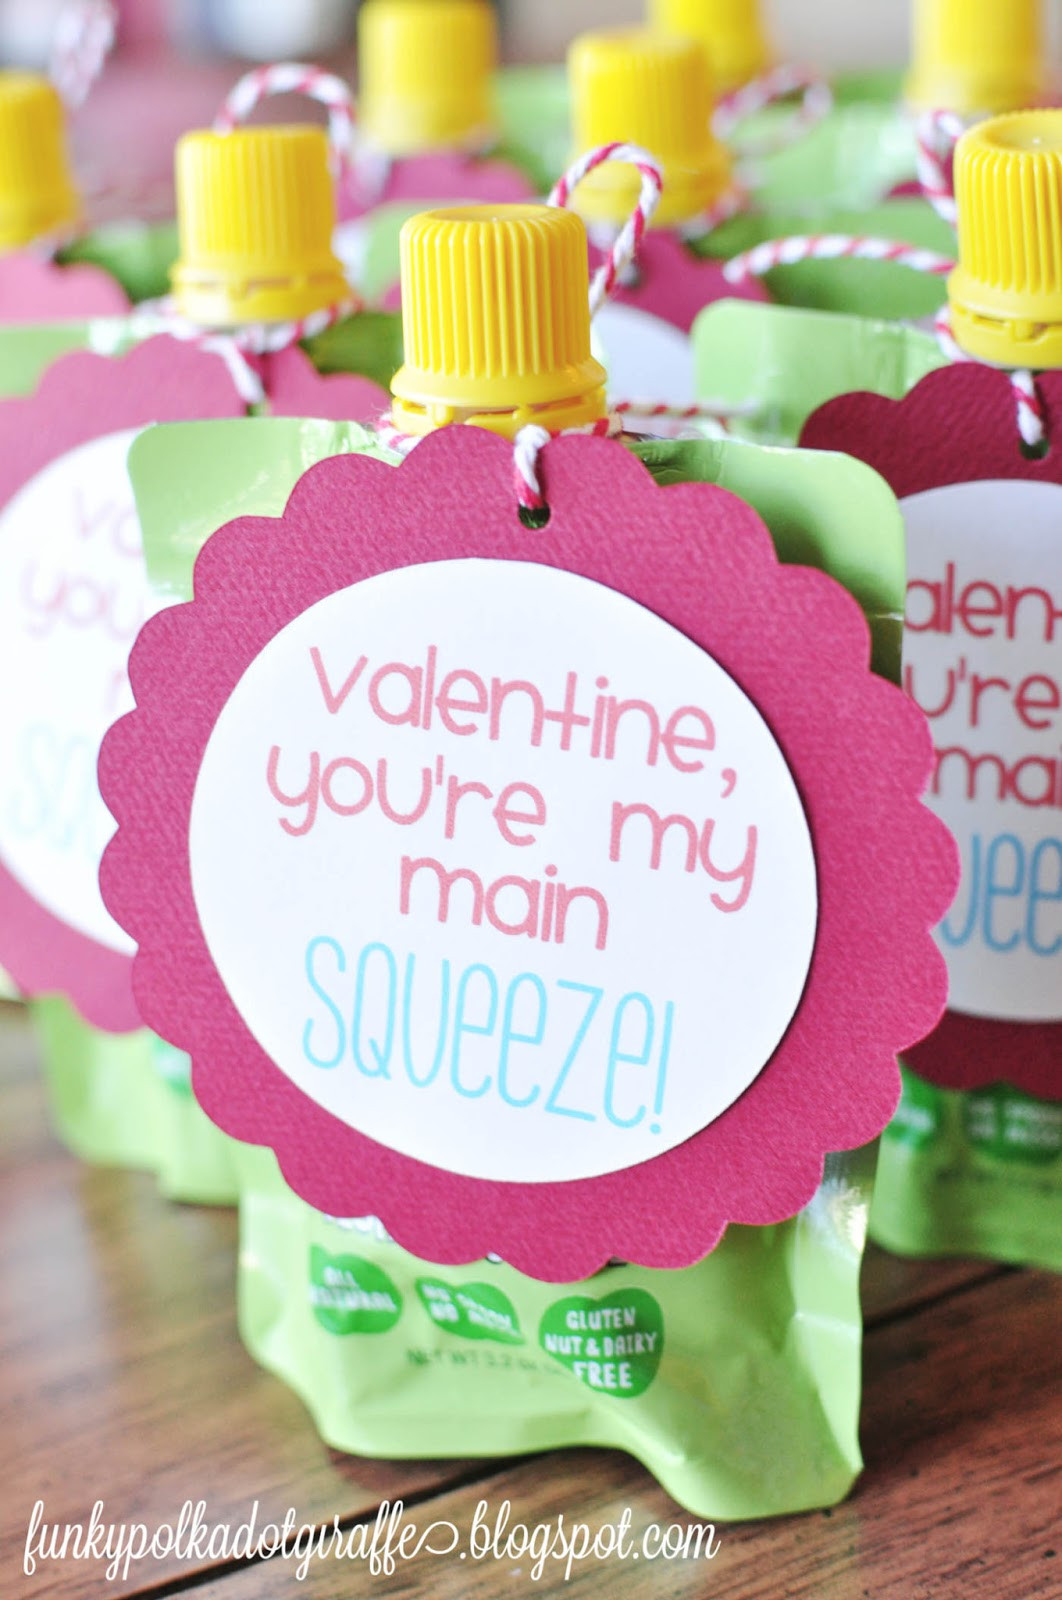 Valentine Gift Ideas For Infants
 Funky Polkadot Giraffe Preschool Valentines You re My